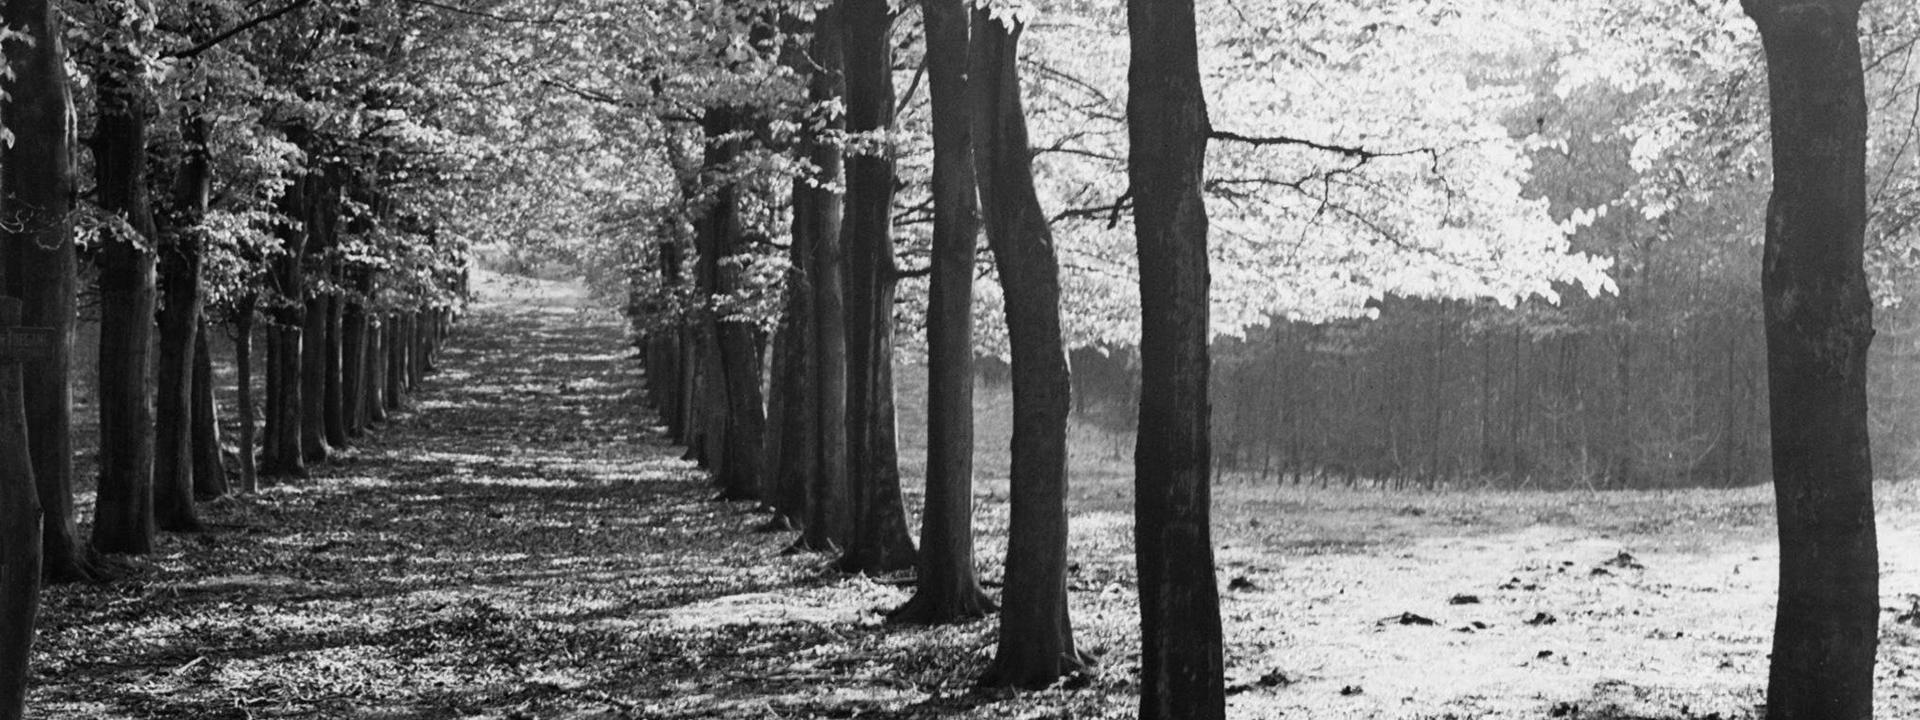 A row of trees